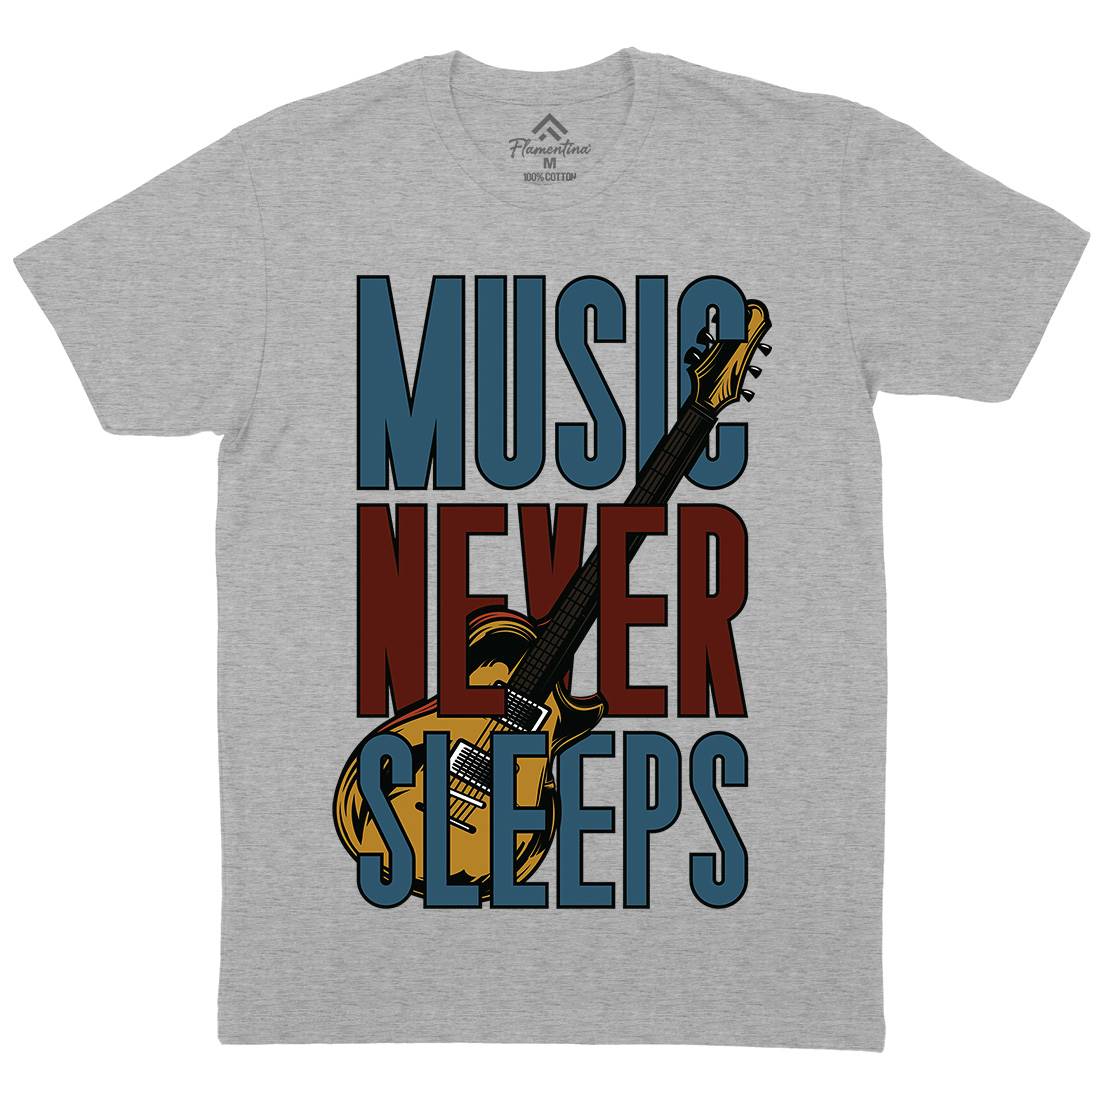 Never Sleeps Mens Crew Neck T-Shirt Music C865